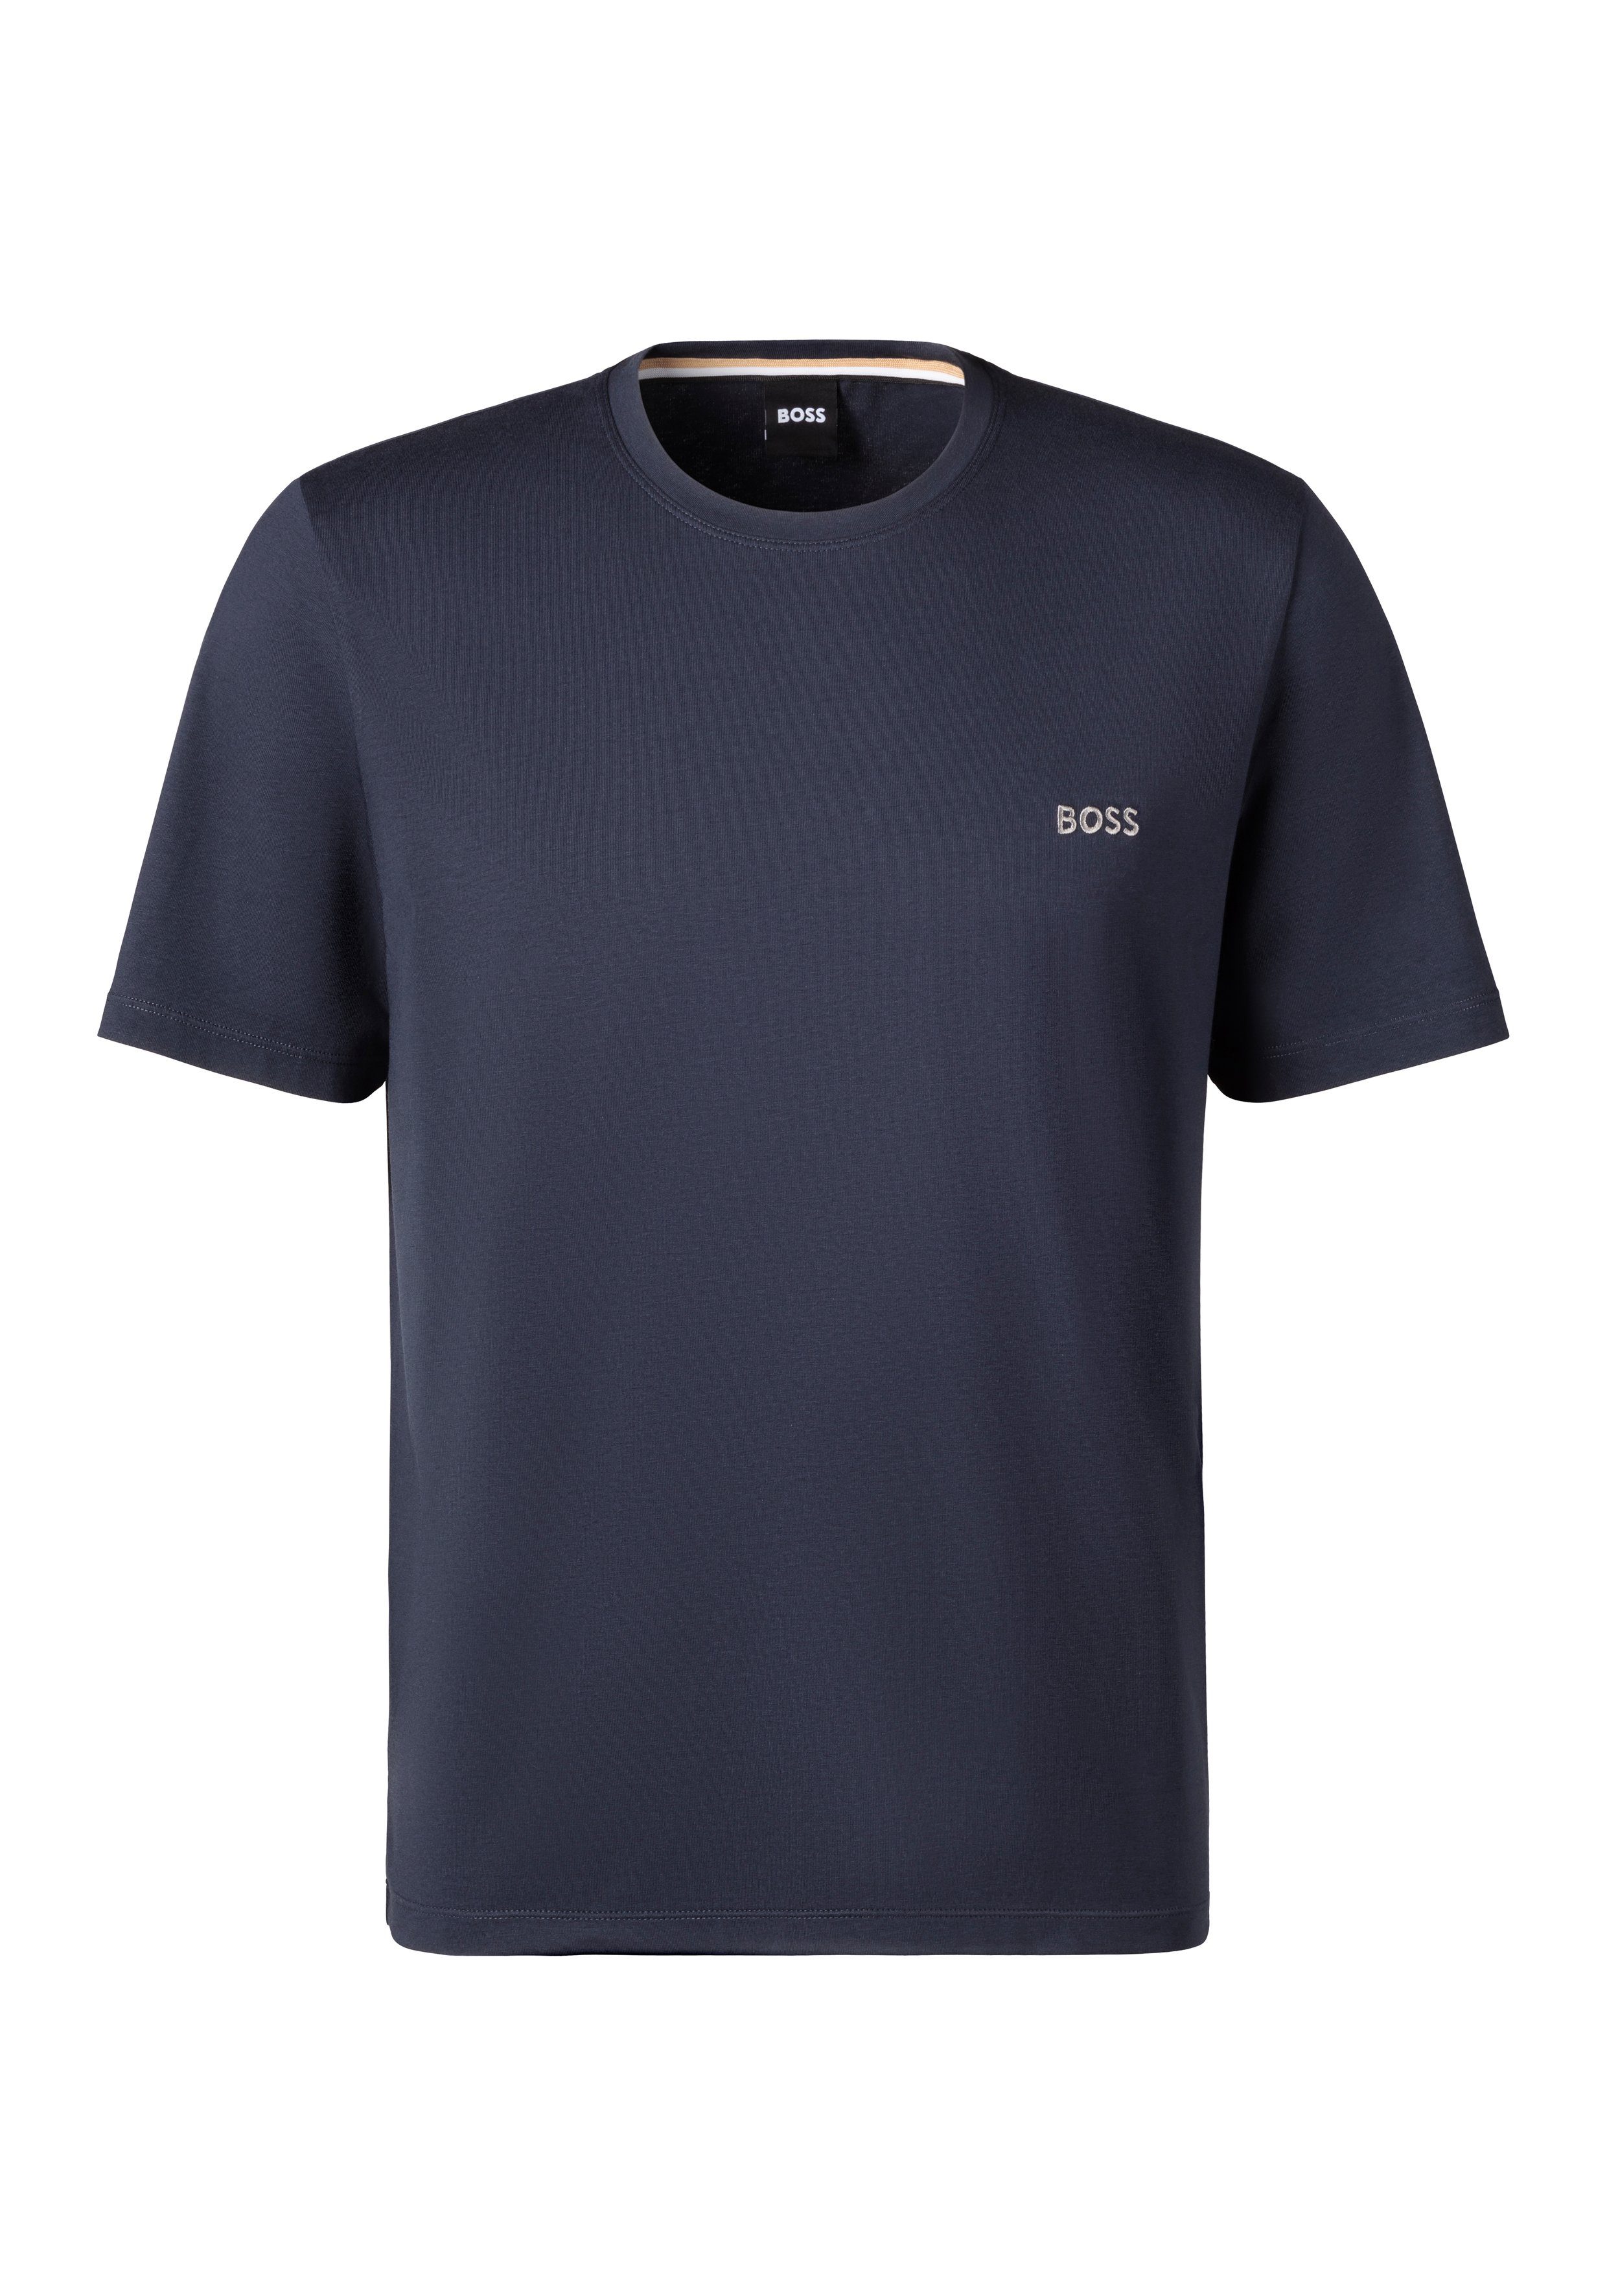 BOSS T-Shirt mit Brustlogo navy